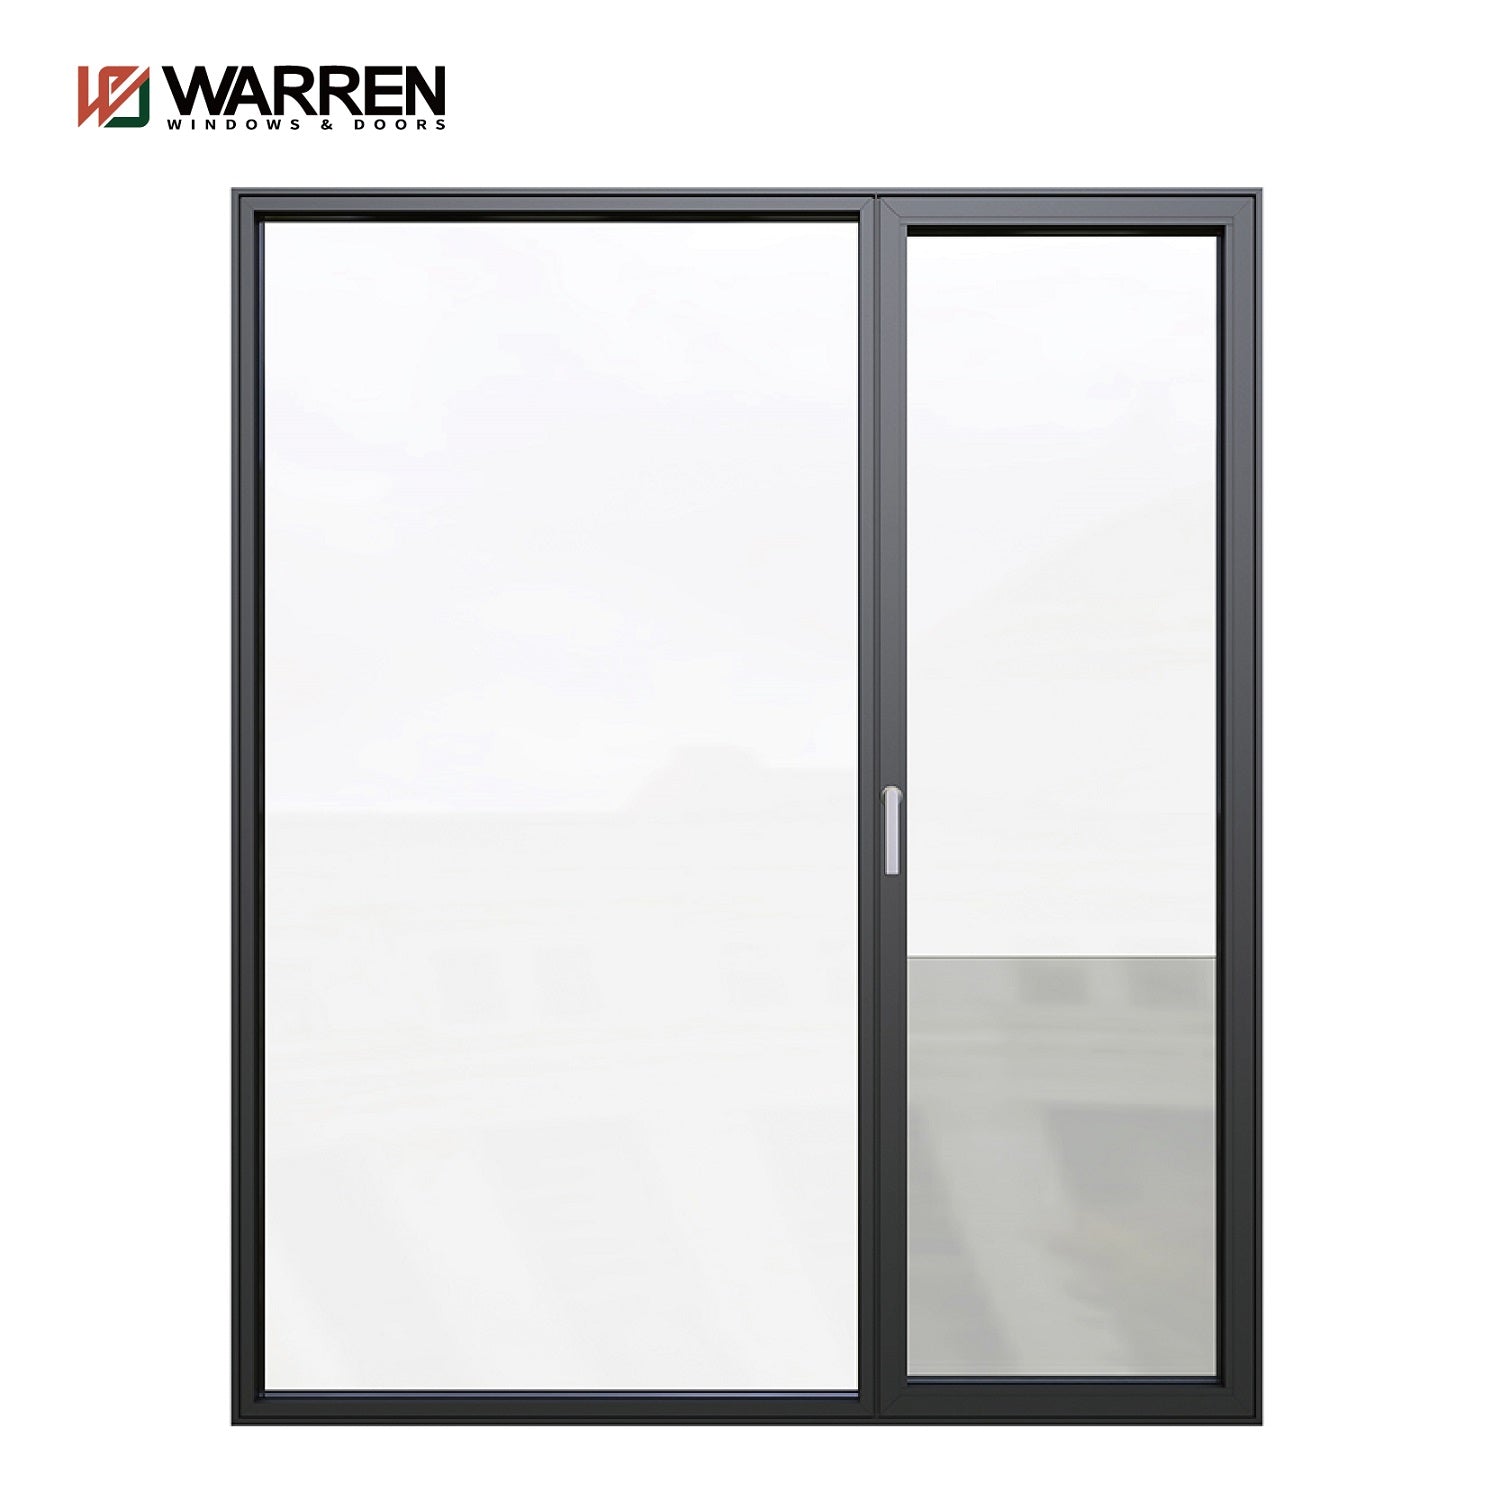 Warren Anti Slide Glass Aluminium Alloy Waterproof Titl & Turn Windows Slim Casement Window Handle Soundproof Insulated Glass